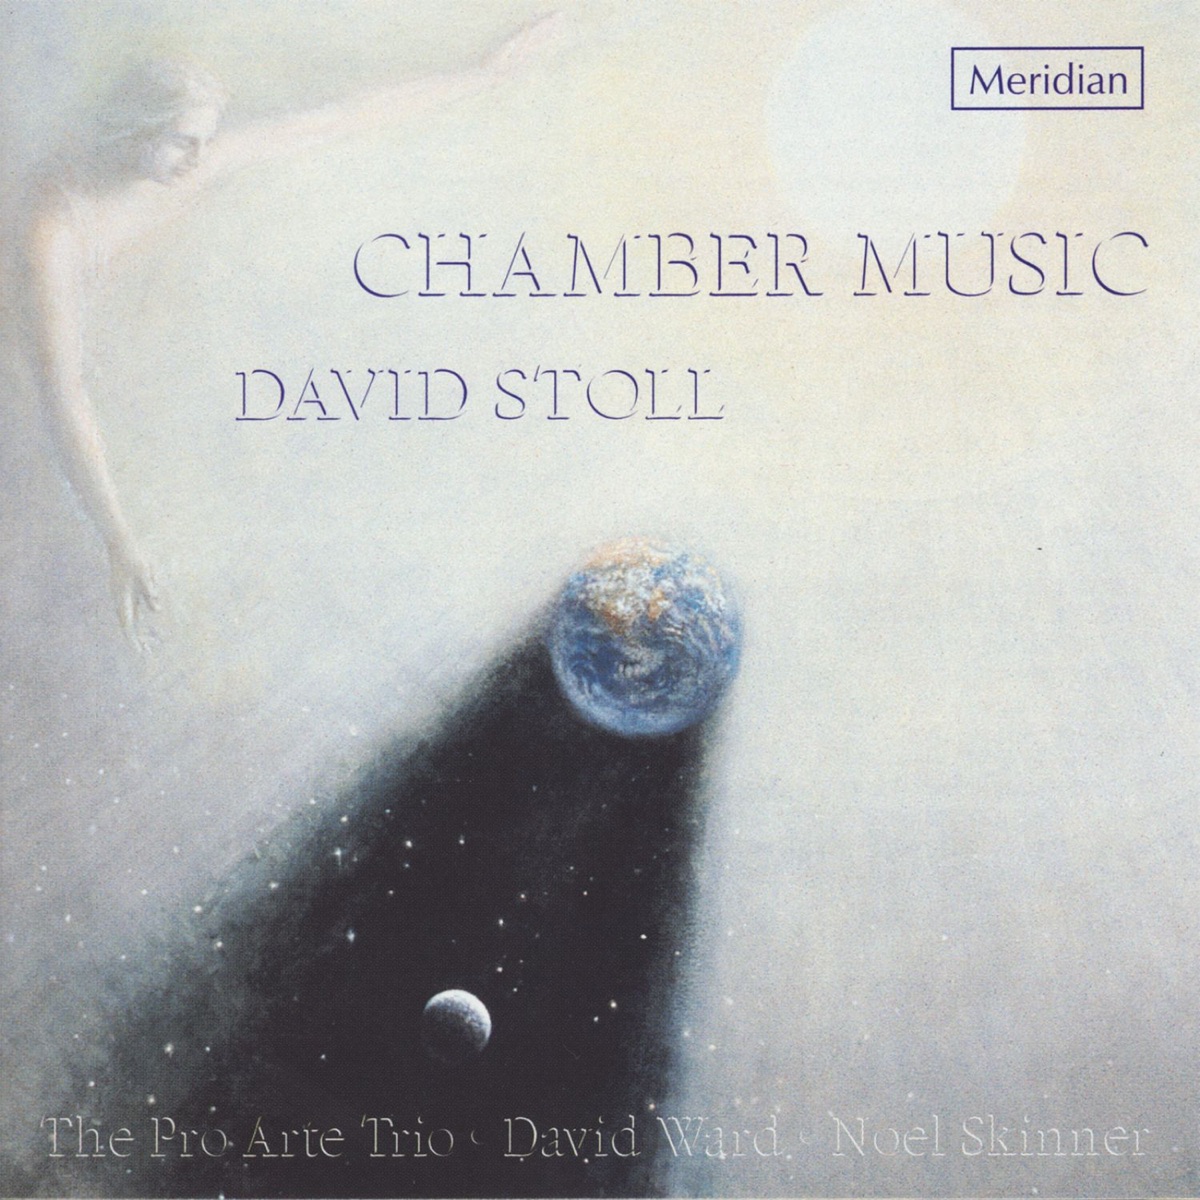 David Stoll: Chamber Music - Album by The Pro Arte Trio, Noel Skinner &  David Ward - Apple Music